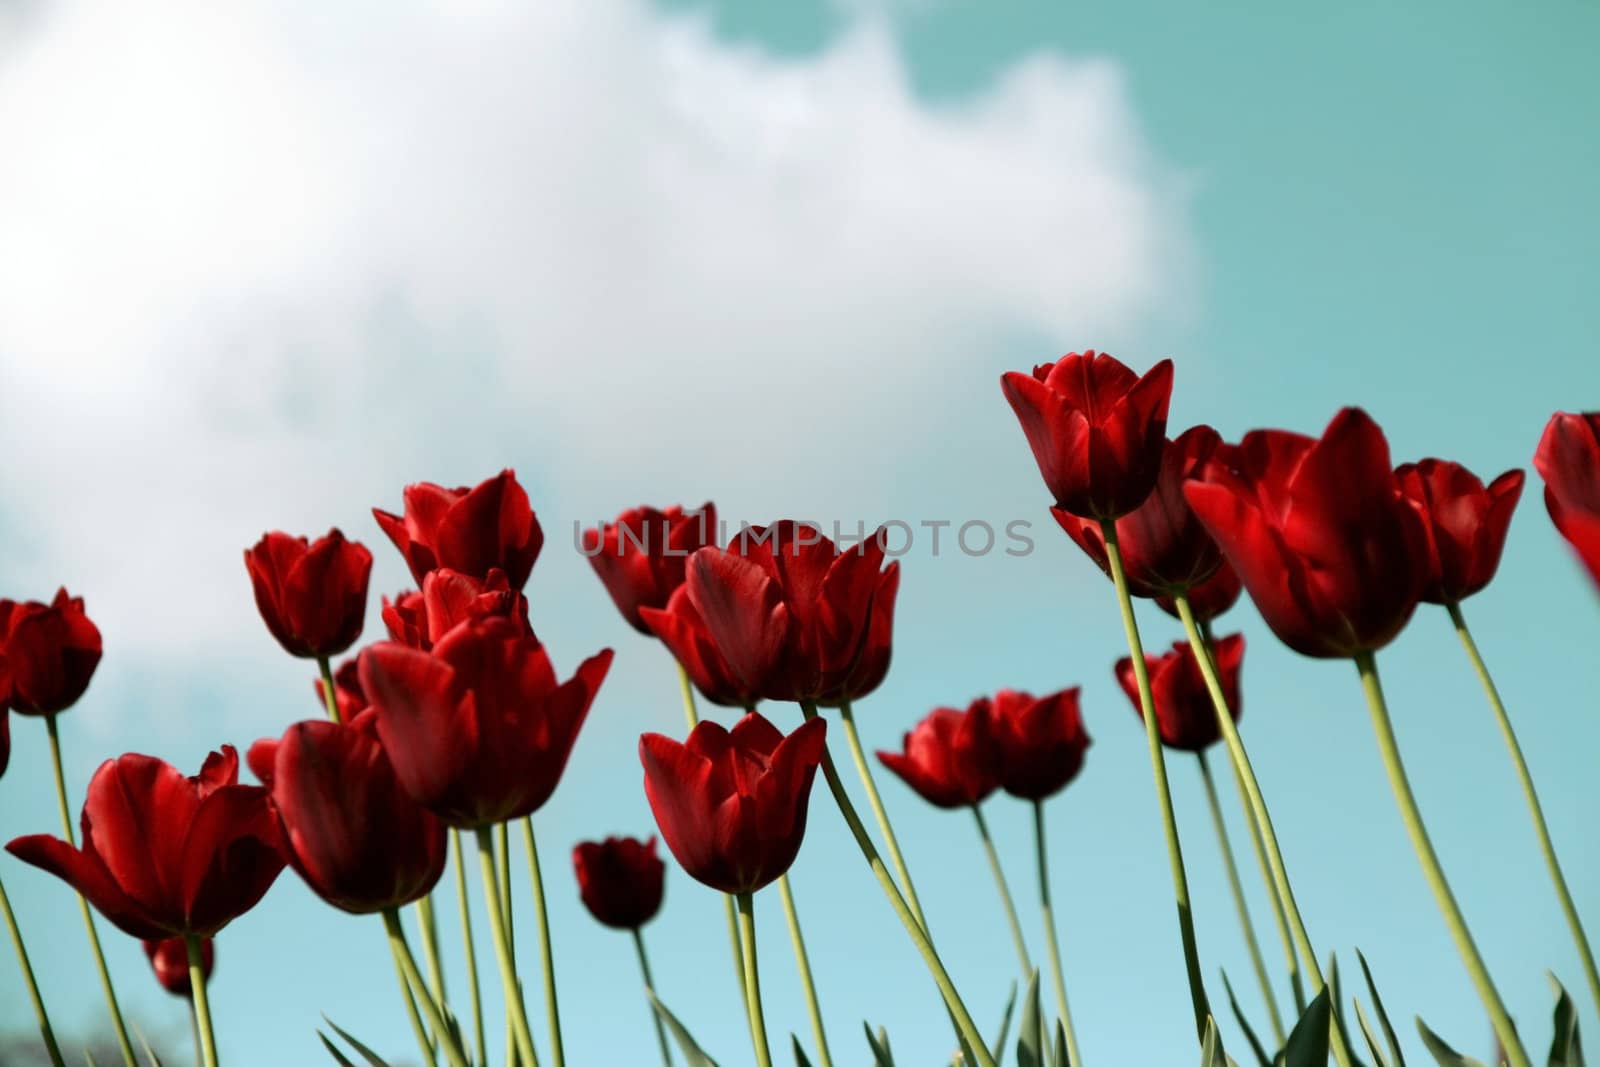 many red tulips in a field - aqua blue sky